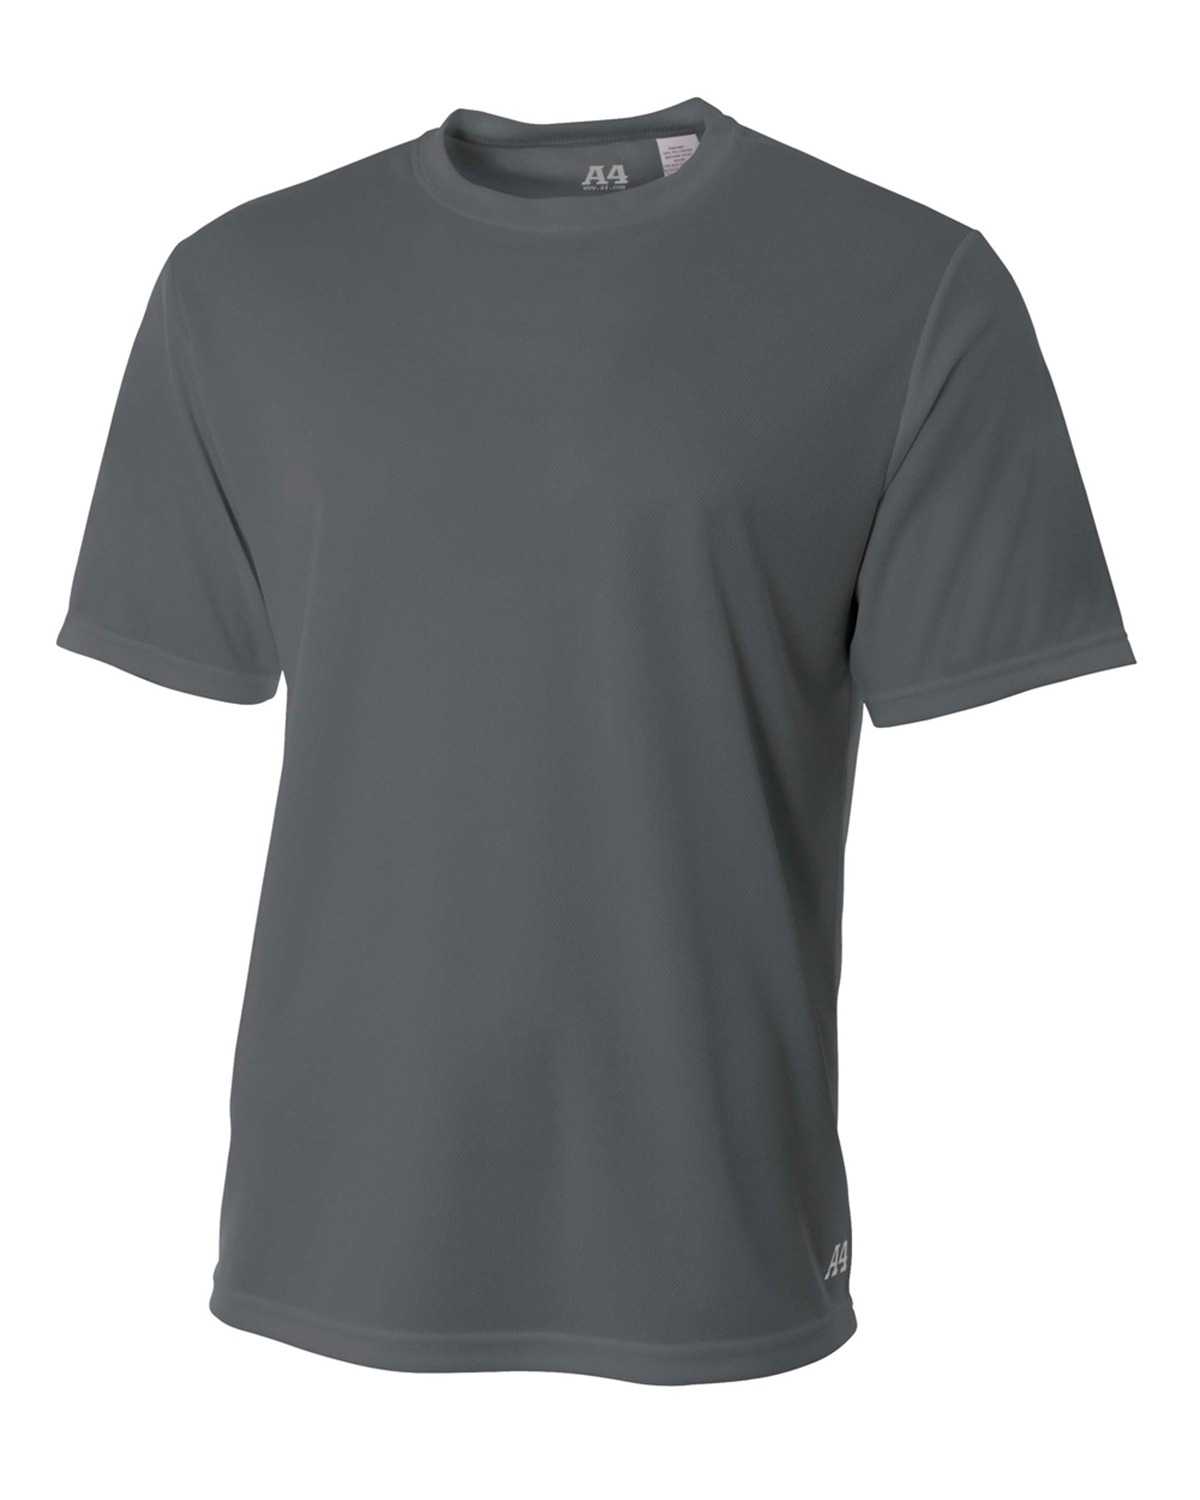 A4 N3252 Men's Shorts Sleeve Crew Birds Eye Mesh T-Shirt ...